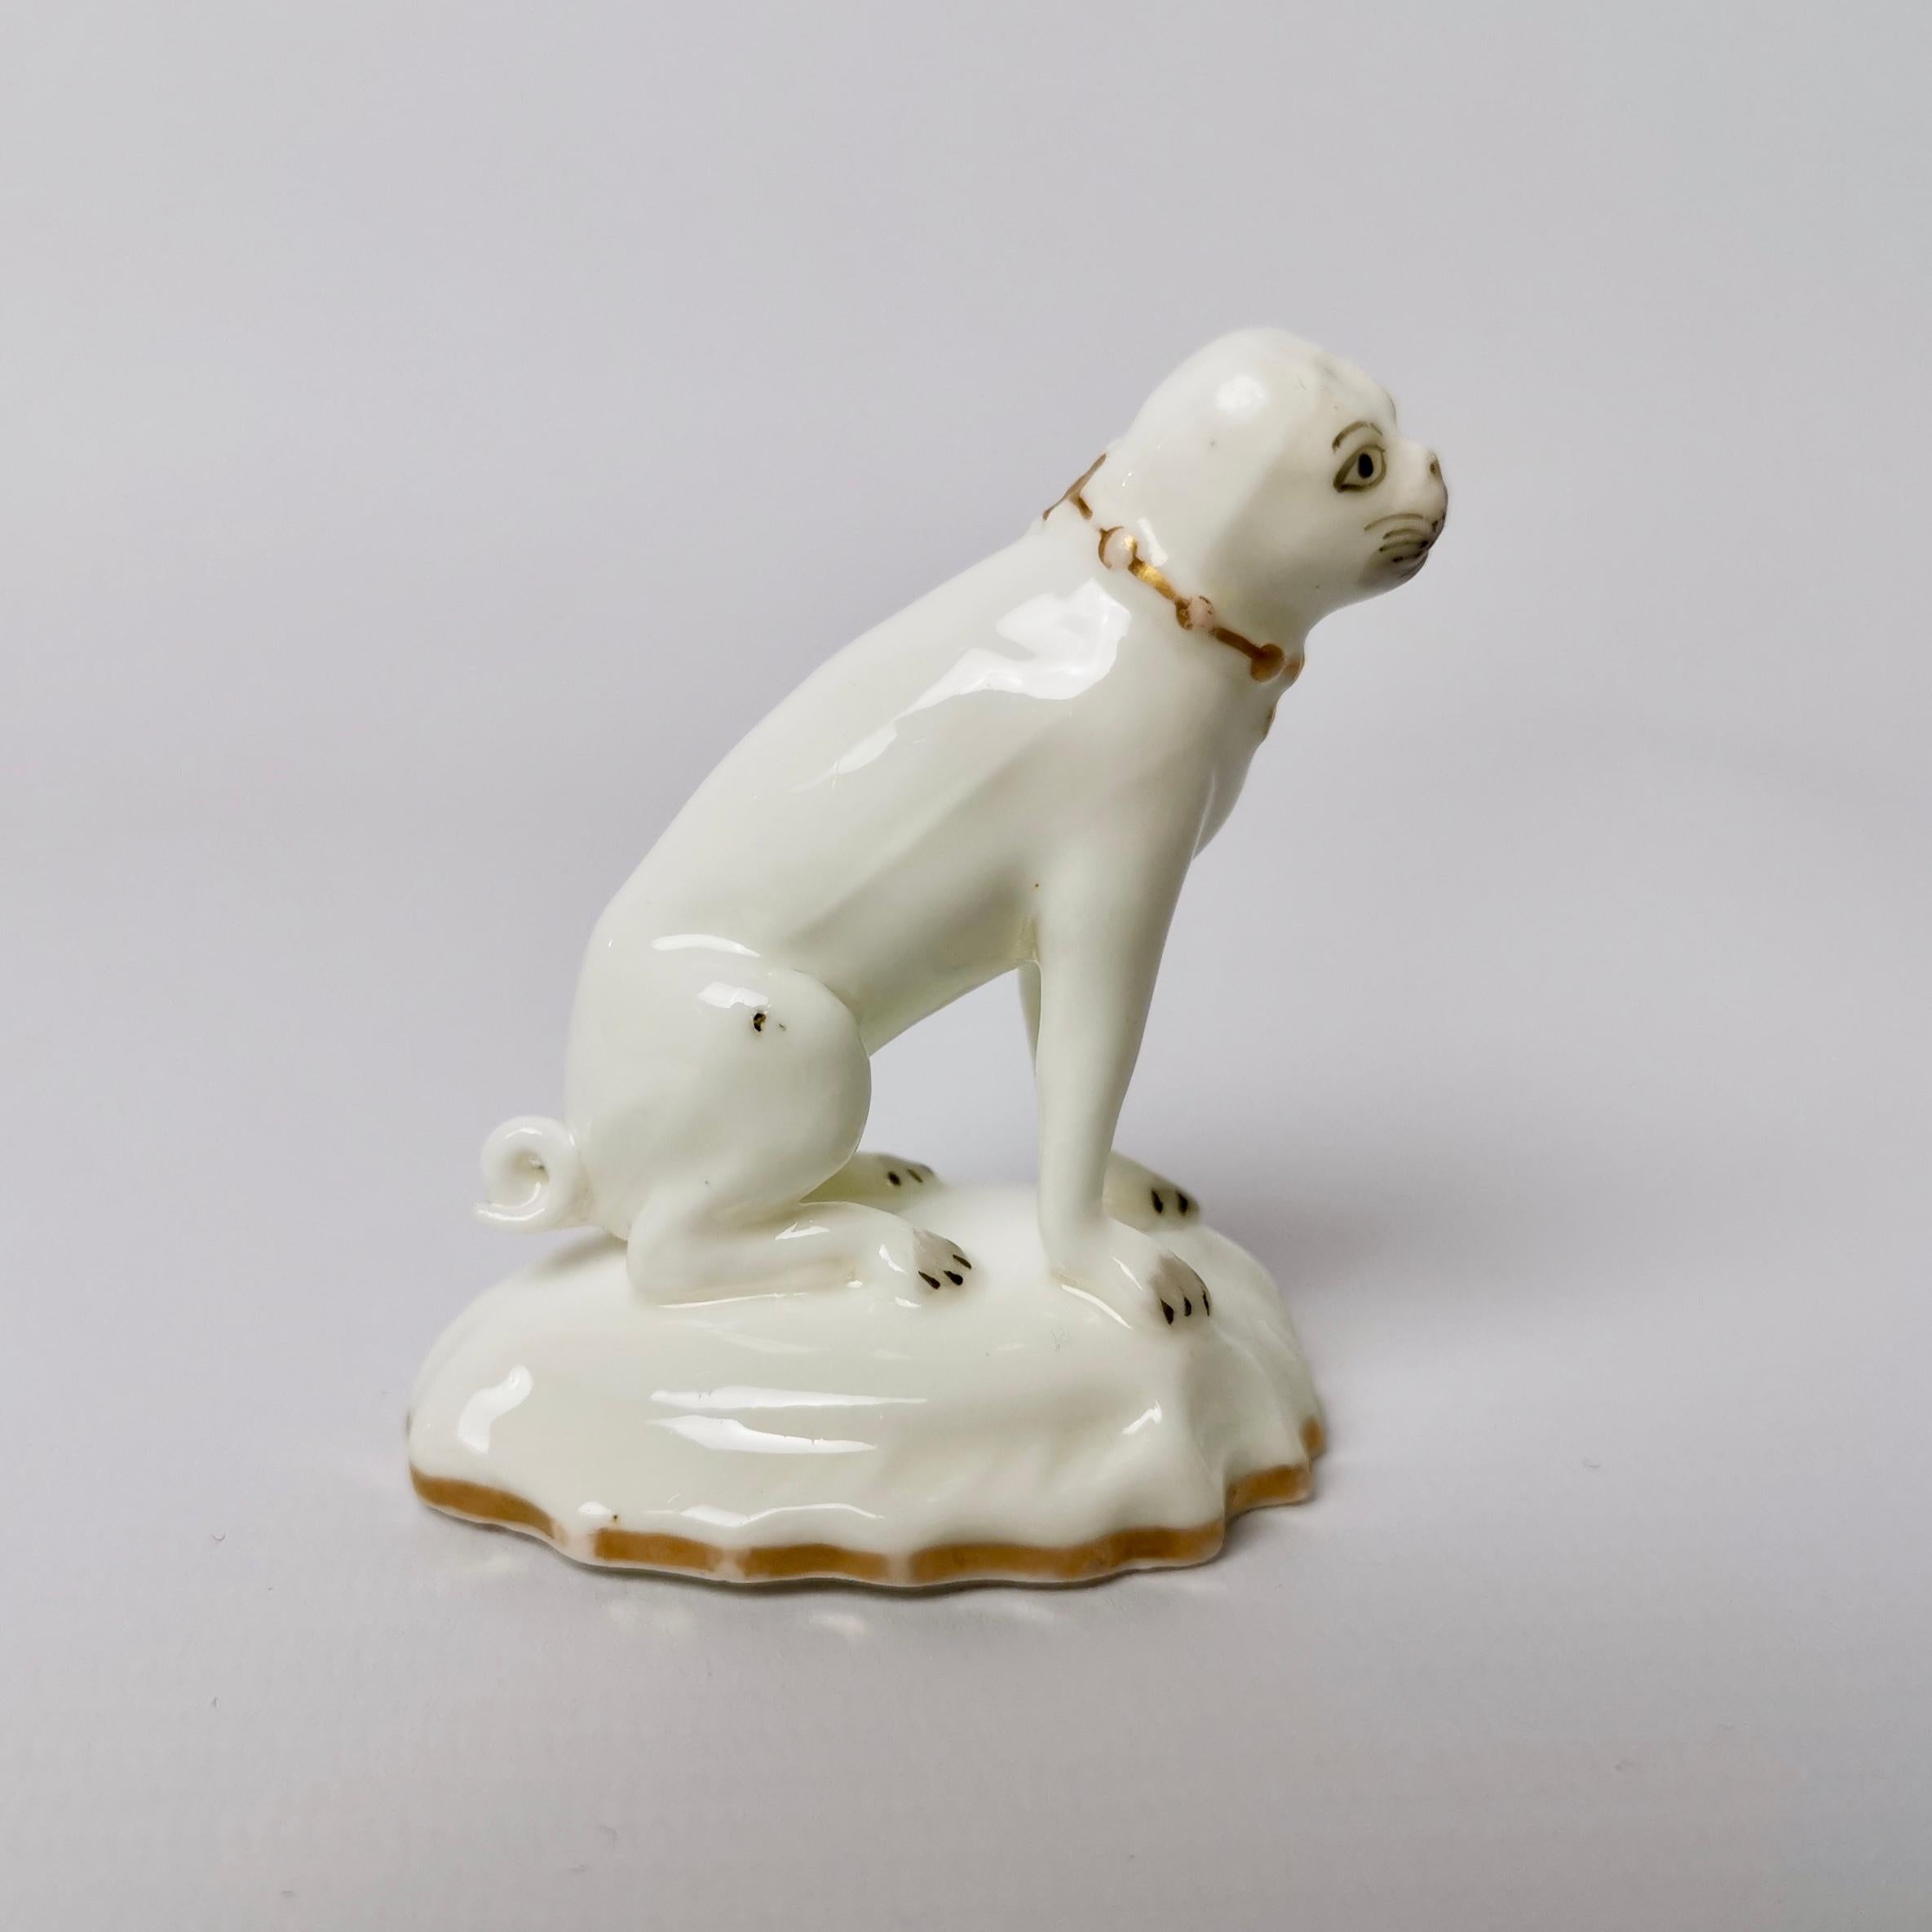 English Rockingham Porcelain Pug Dog, White, Rococo Revival, circa 1835